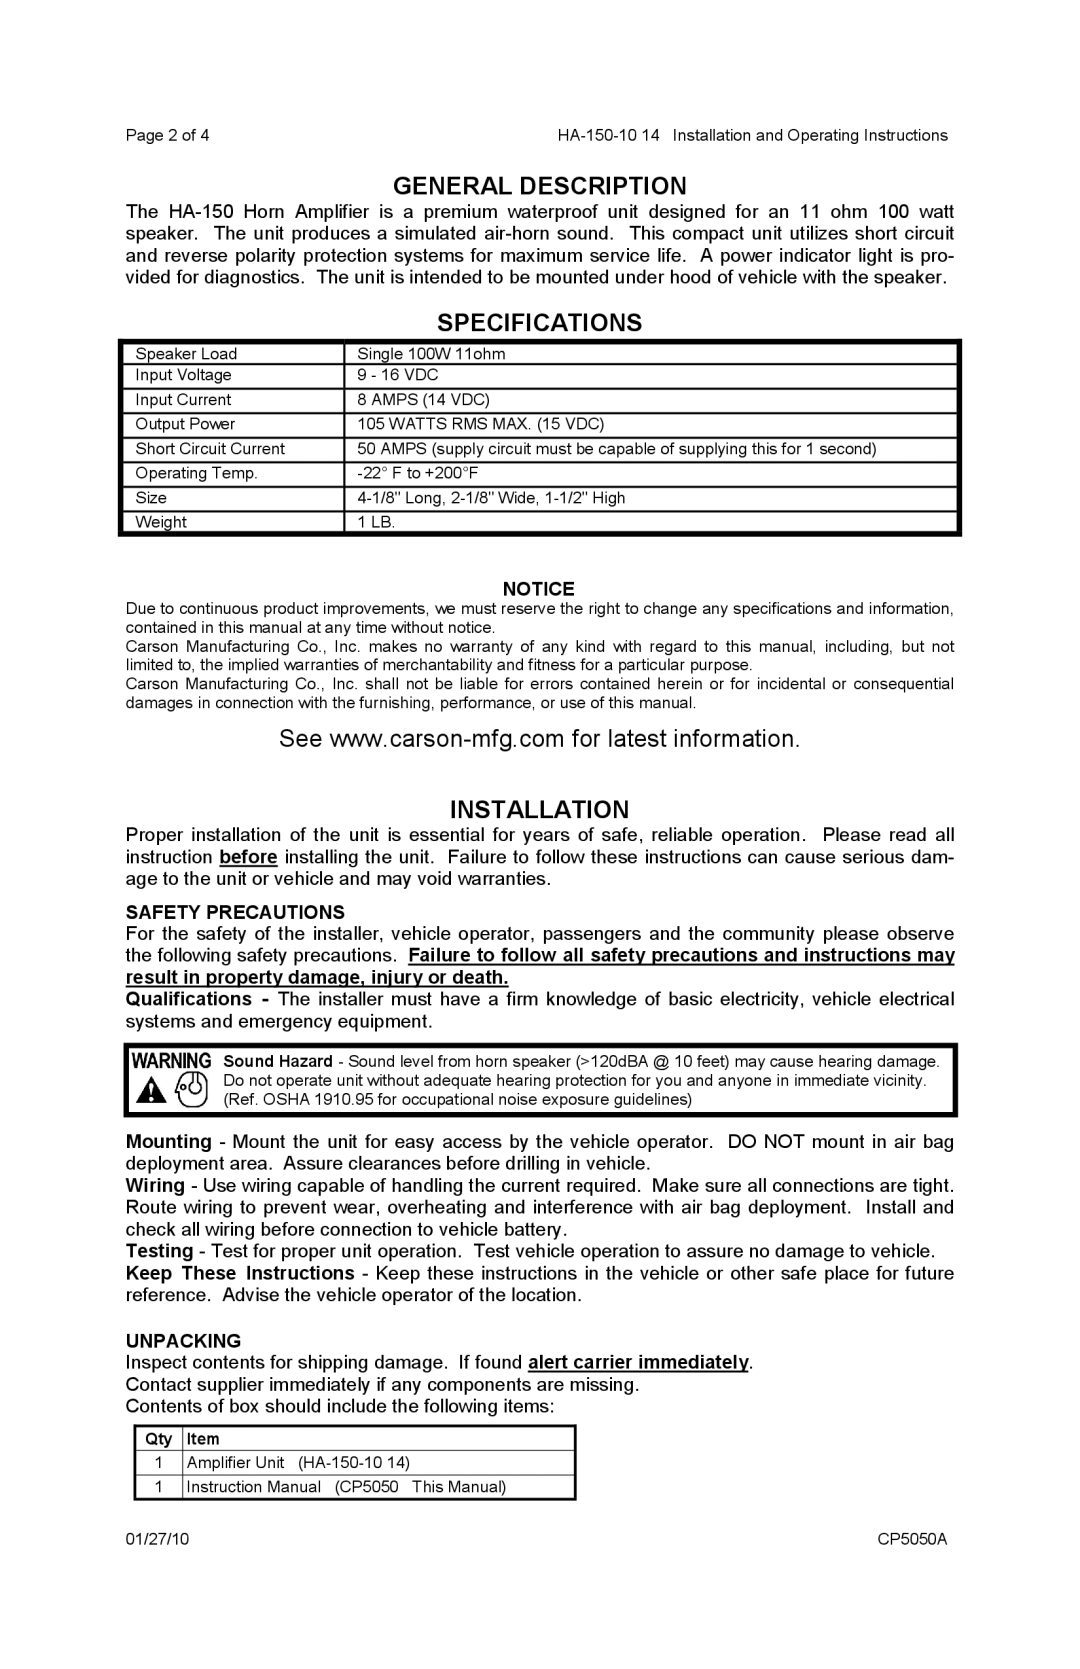 Carson HA-150-10 manual General Description, Specifications, Installation, Safety Precautions, Unpacking 